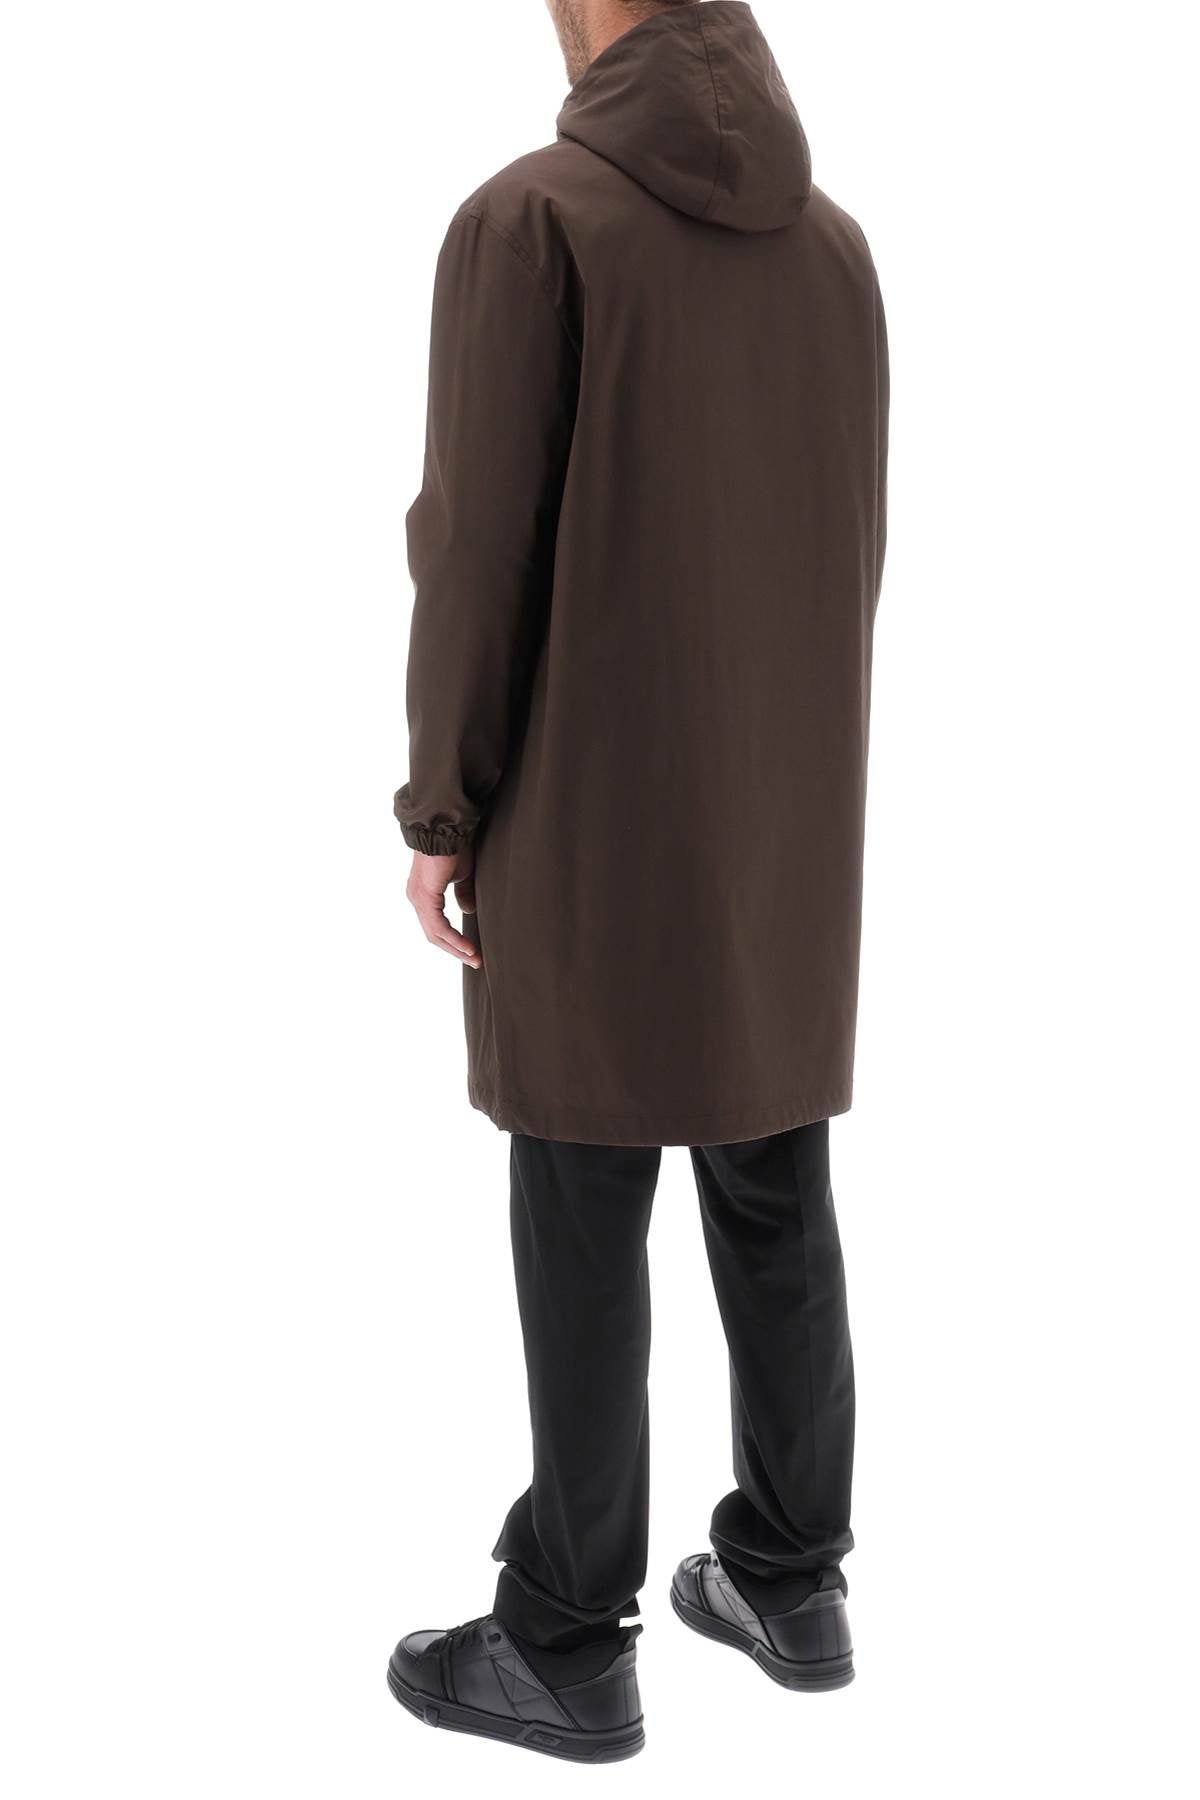 VALENTINO GARAVANI Brown Long Raincoat with Rubber Label - Men's Clothing